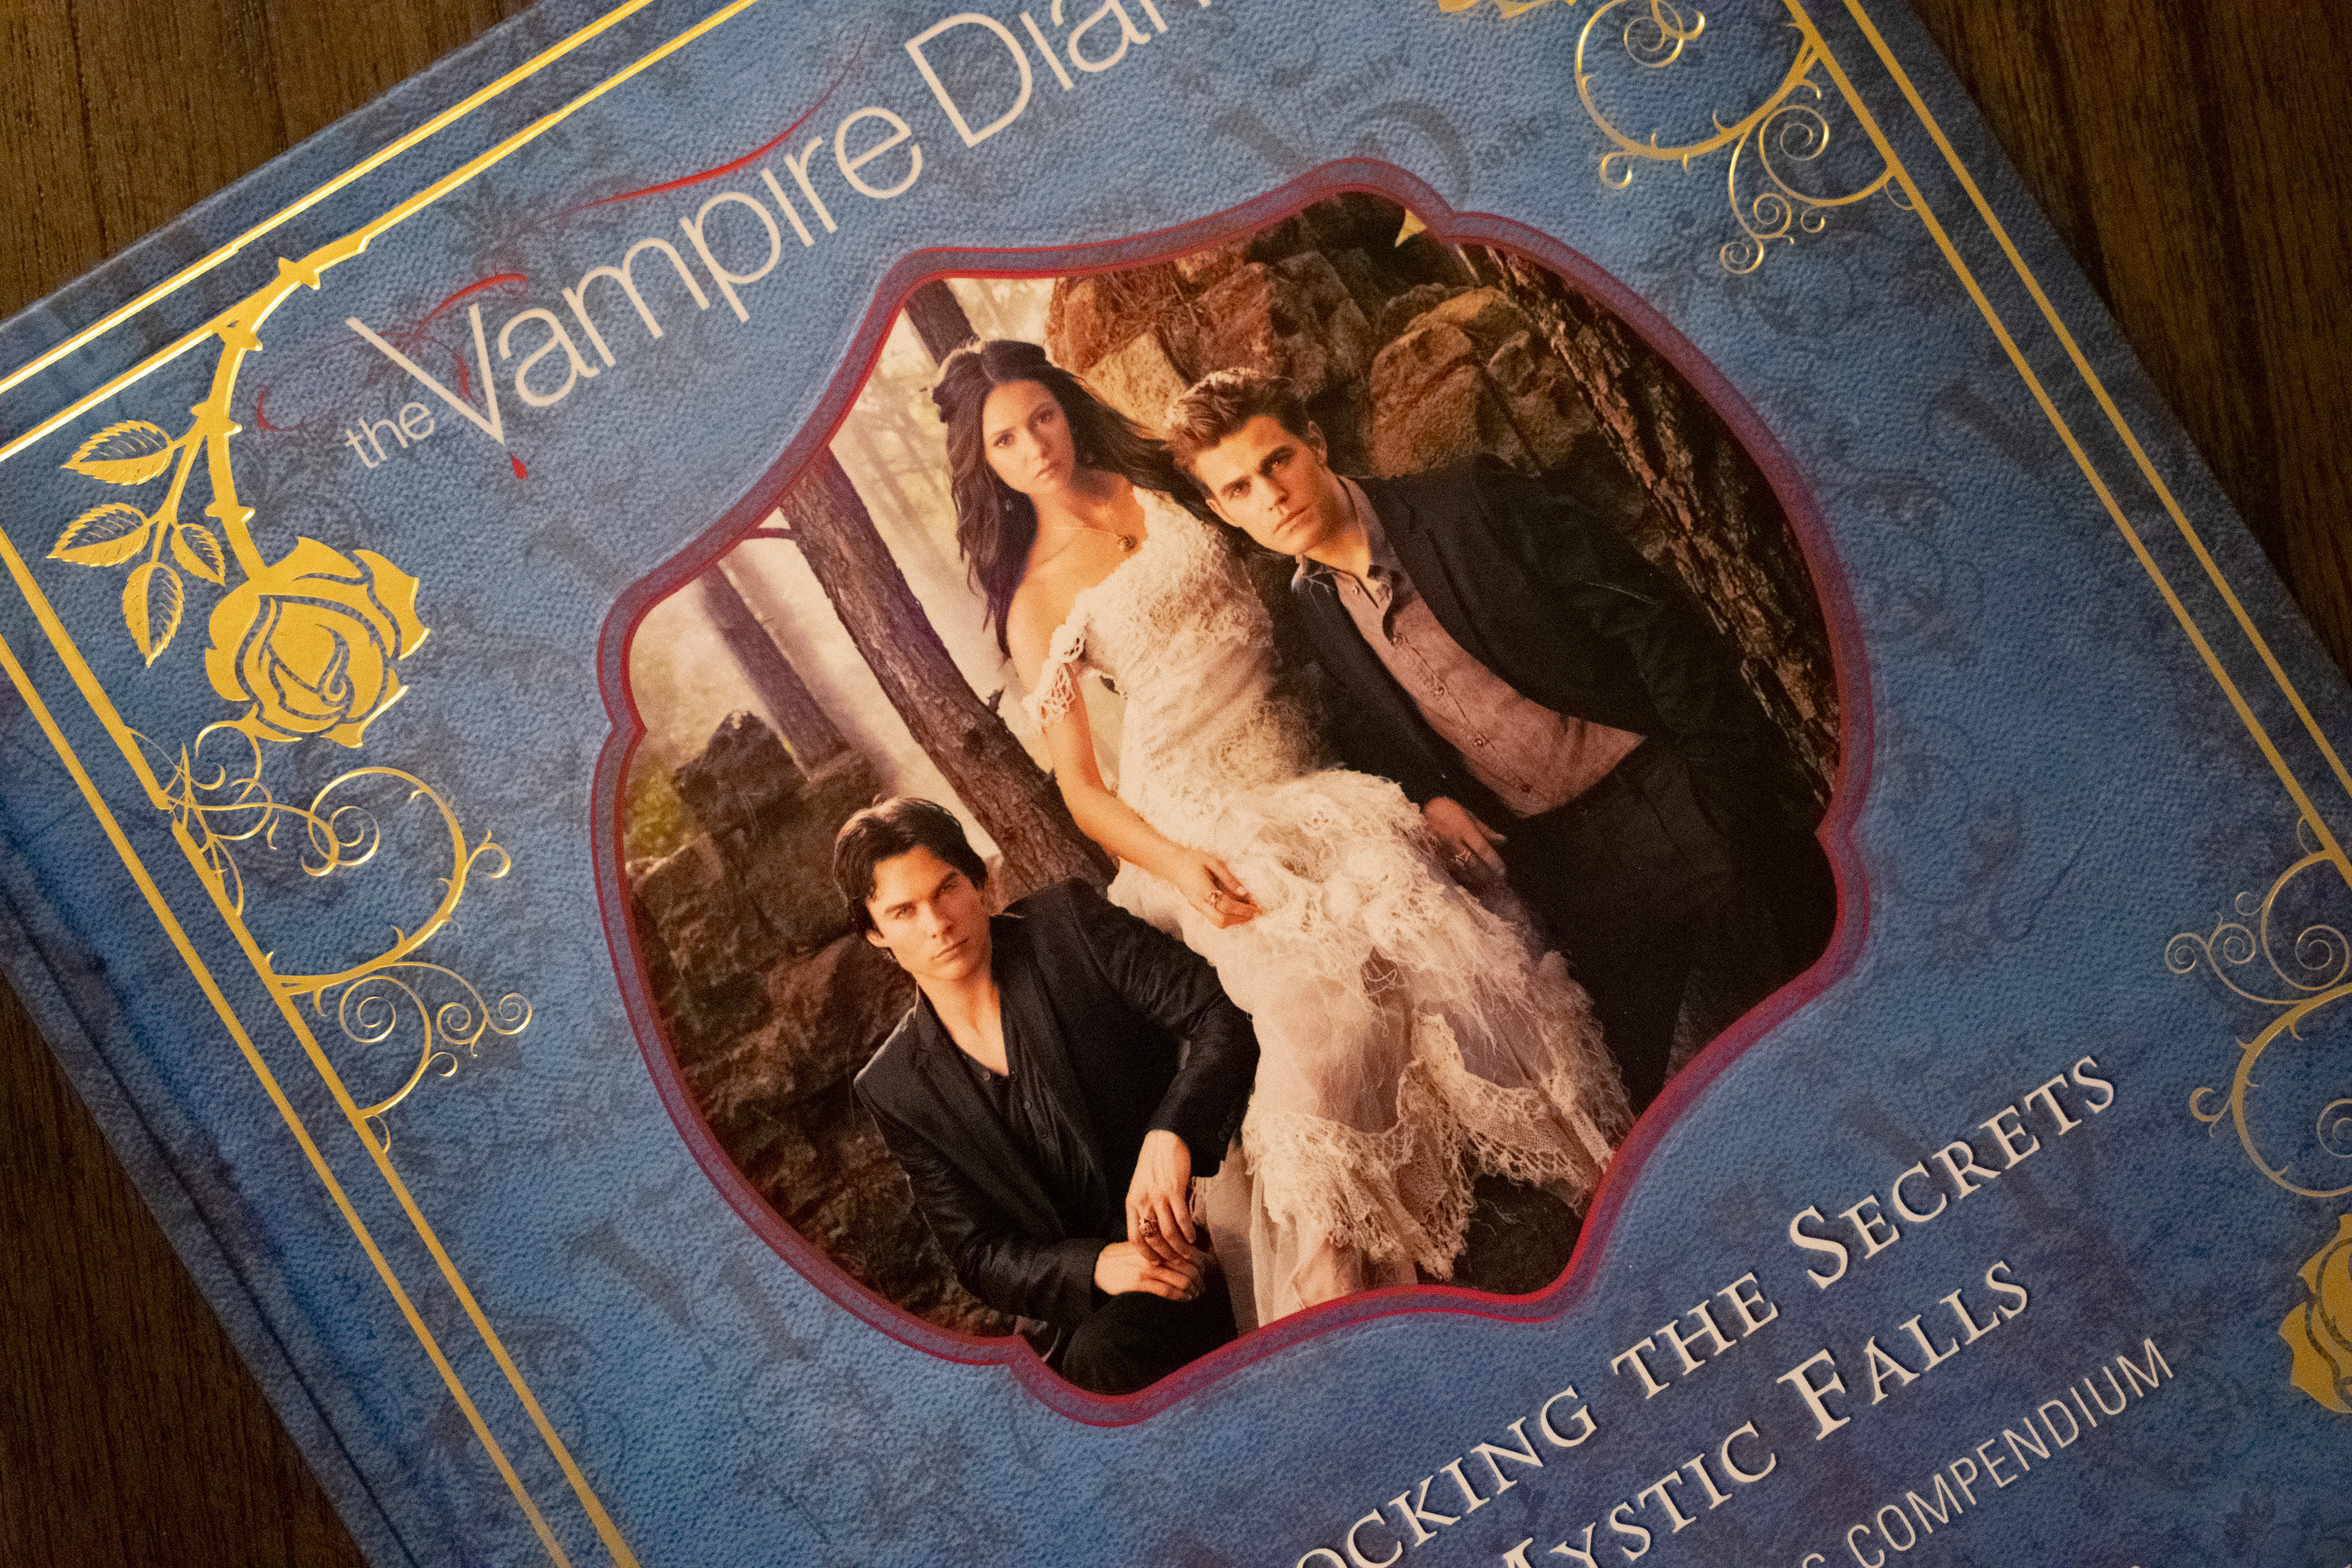 The Vampire Diaries: Unlocking the Secrets of Mystic Falls